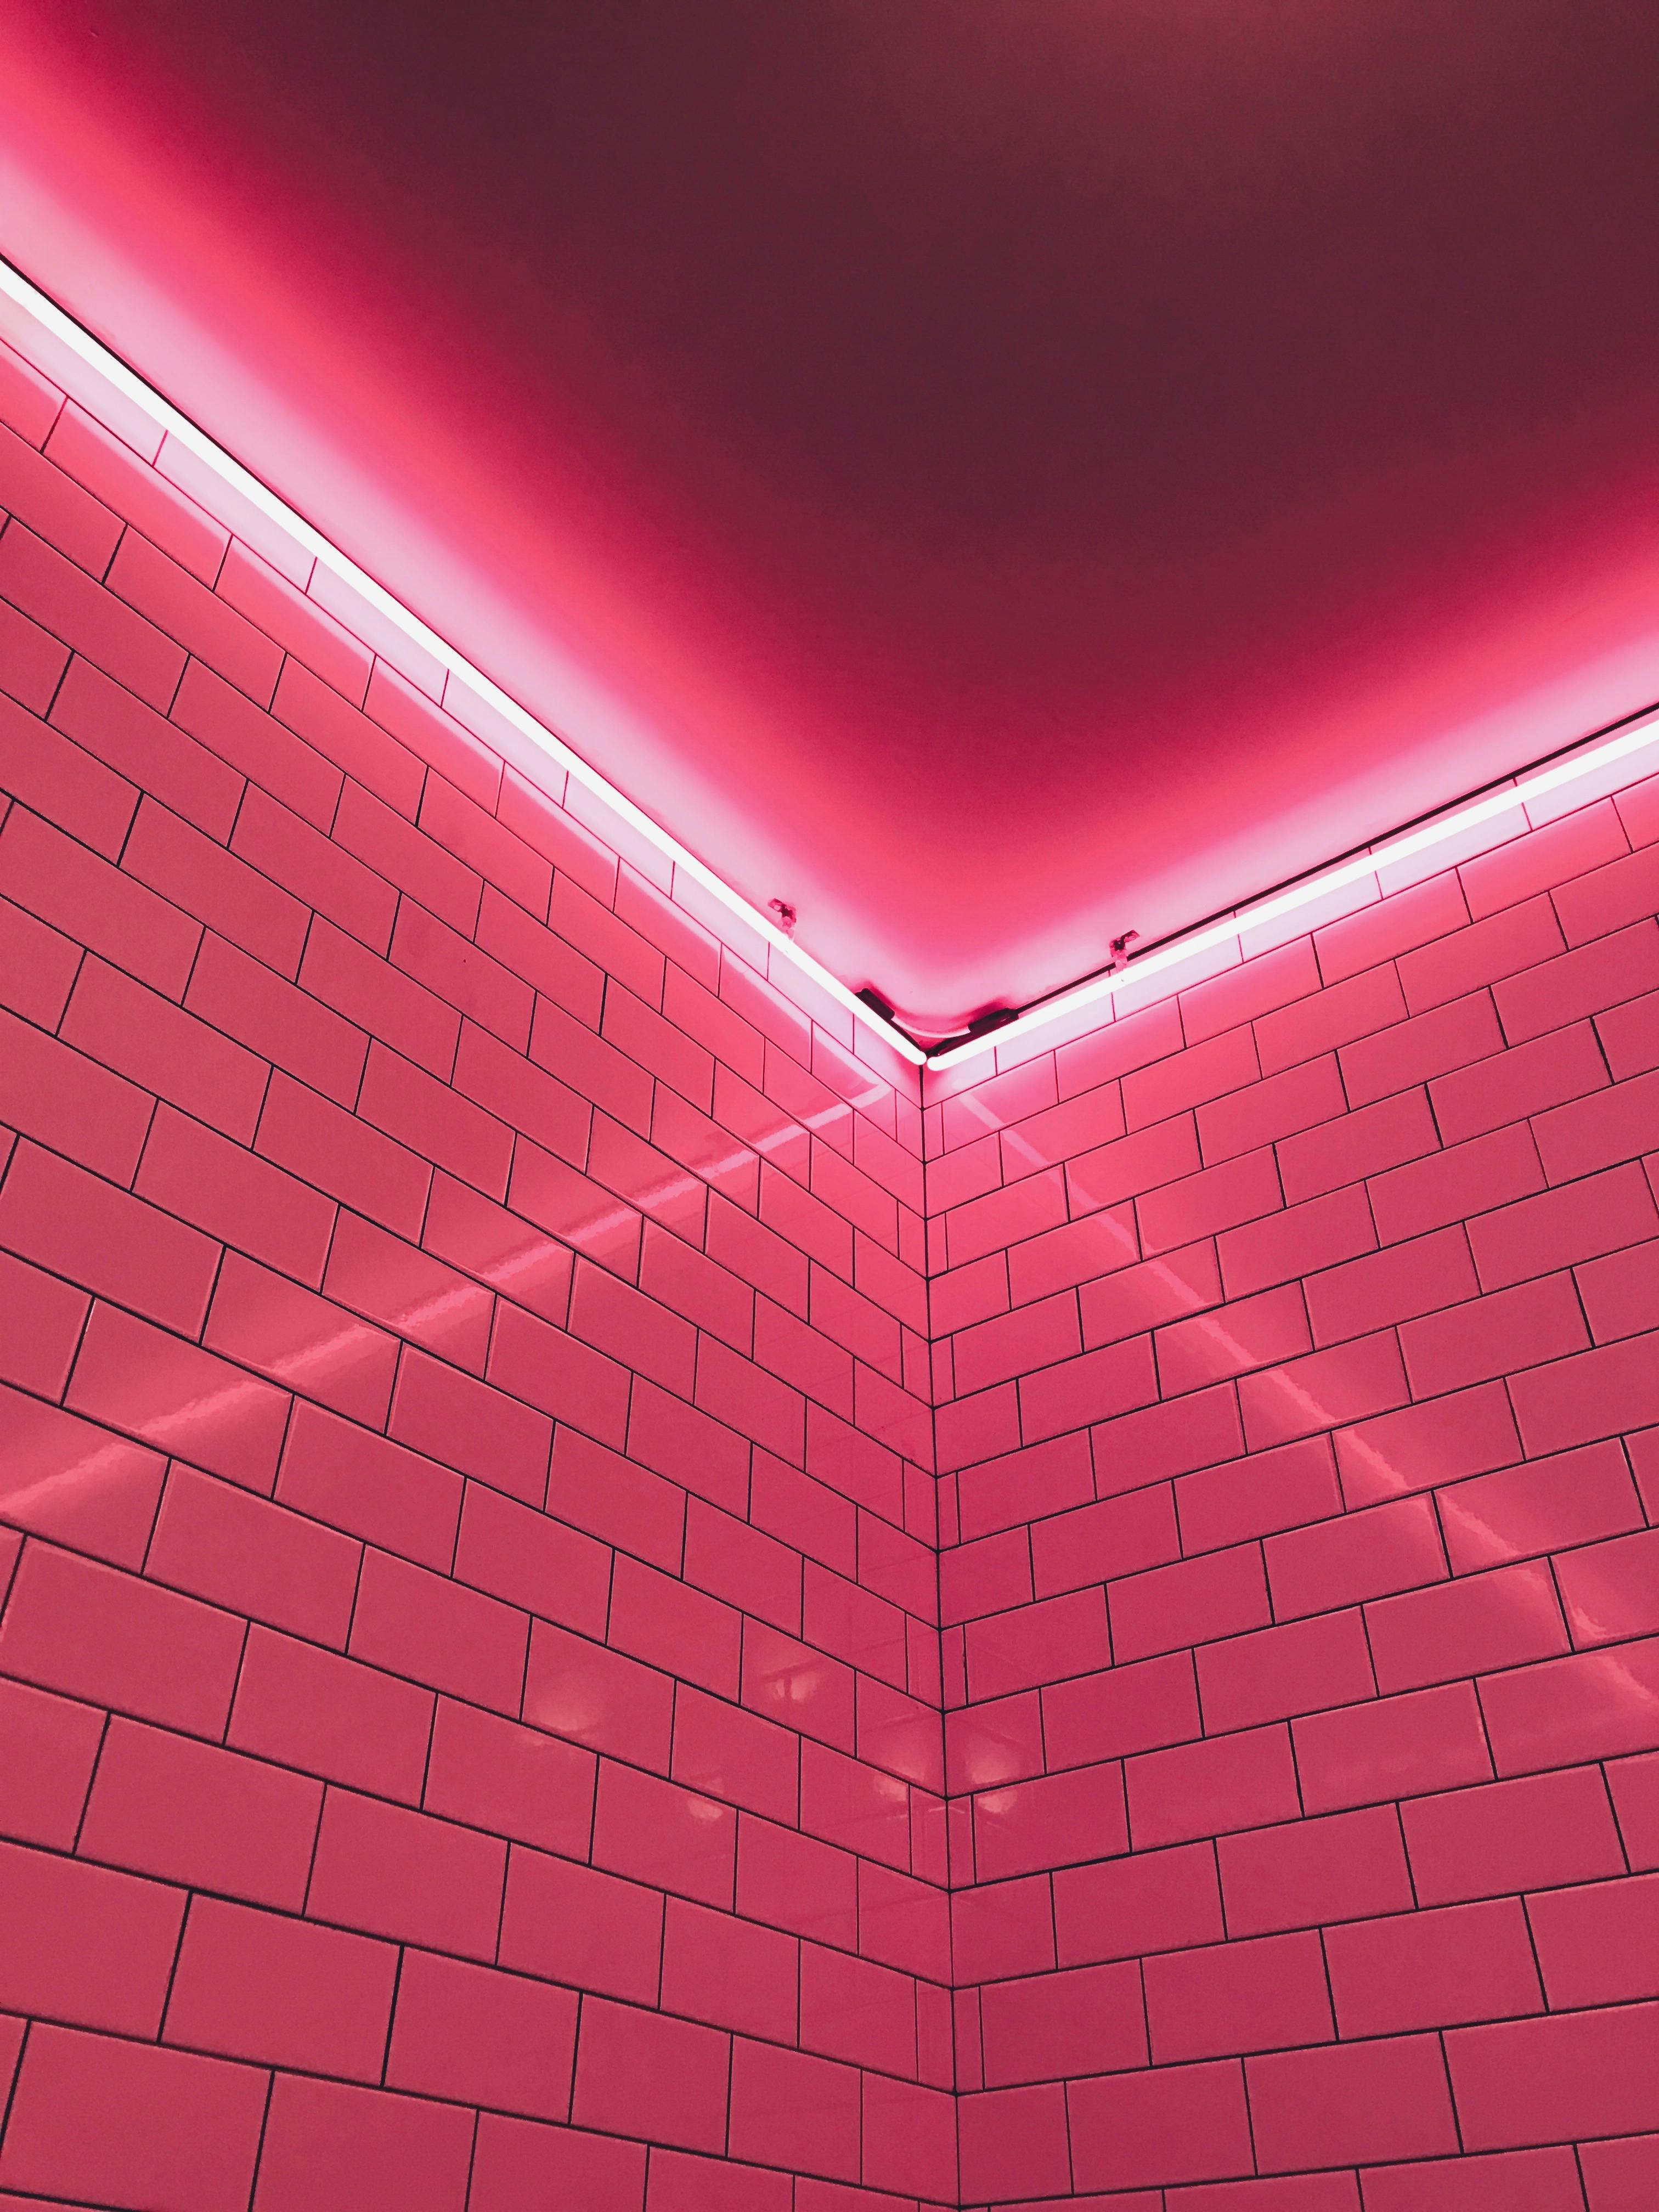 red pink wallpaper